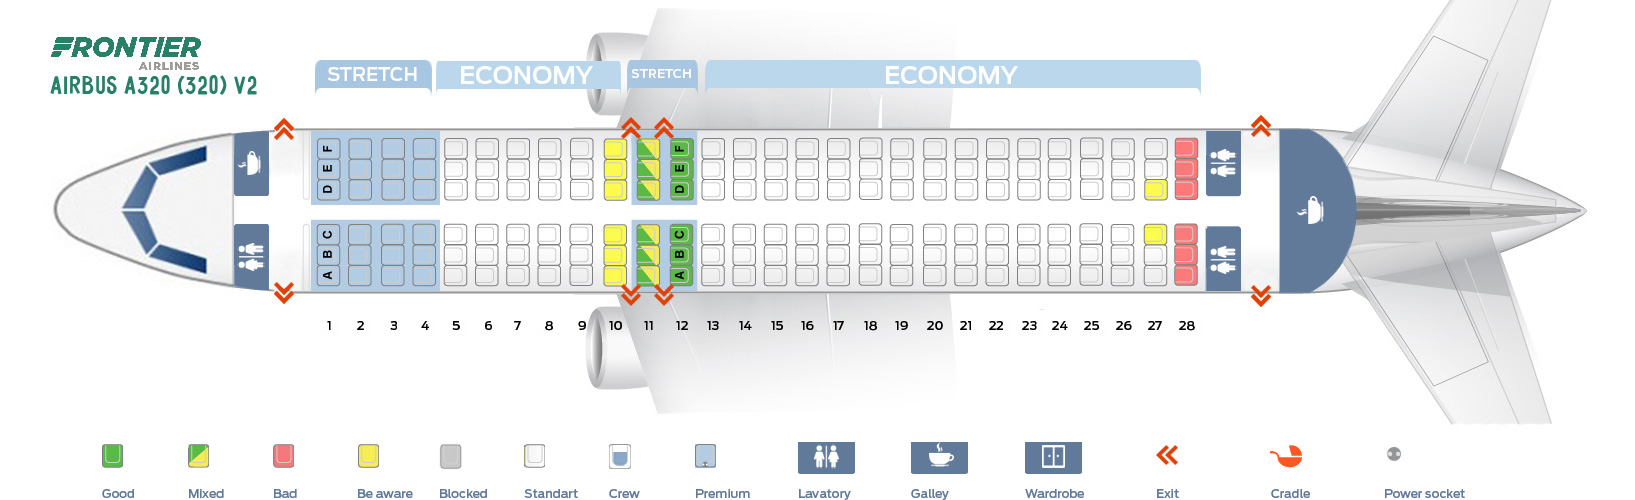 Frontier Flight Seating Chart